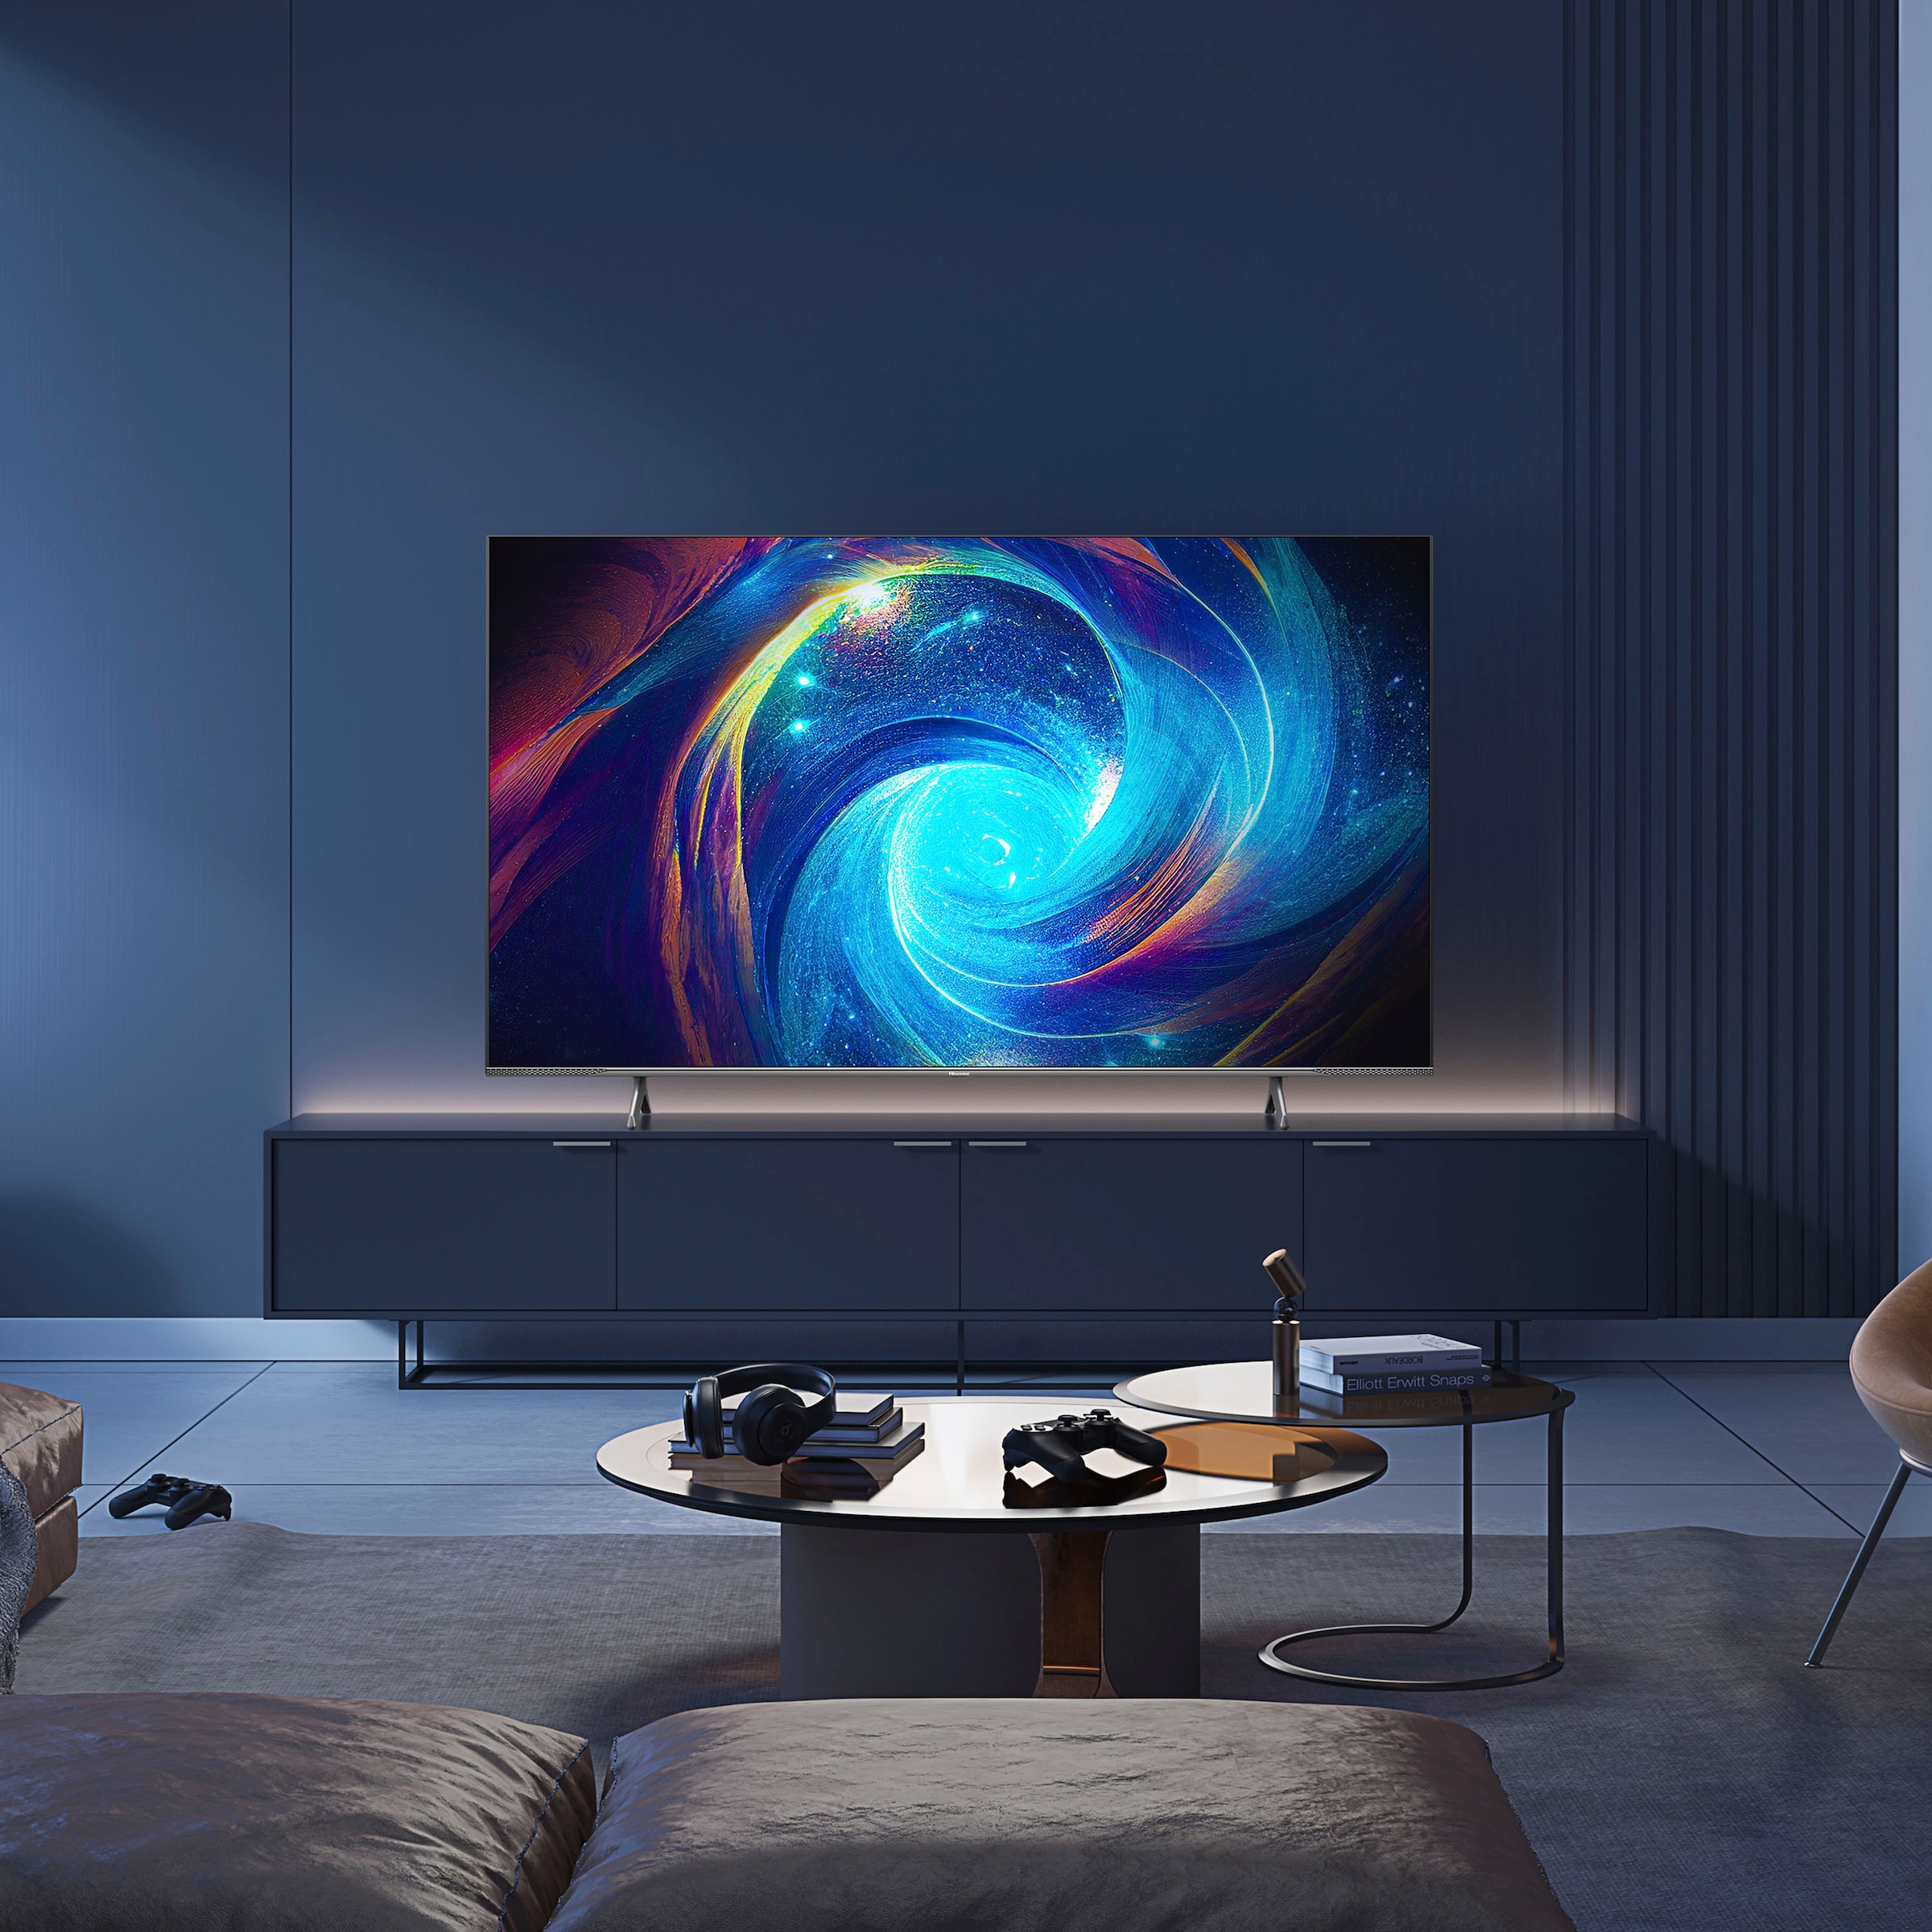 Hisense LED-Fernseher »65E7KQ PRO«, 164 cm/65 Zoll, 4K Ultra HD